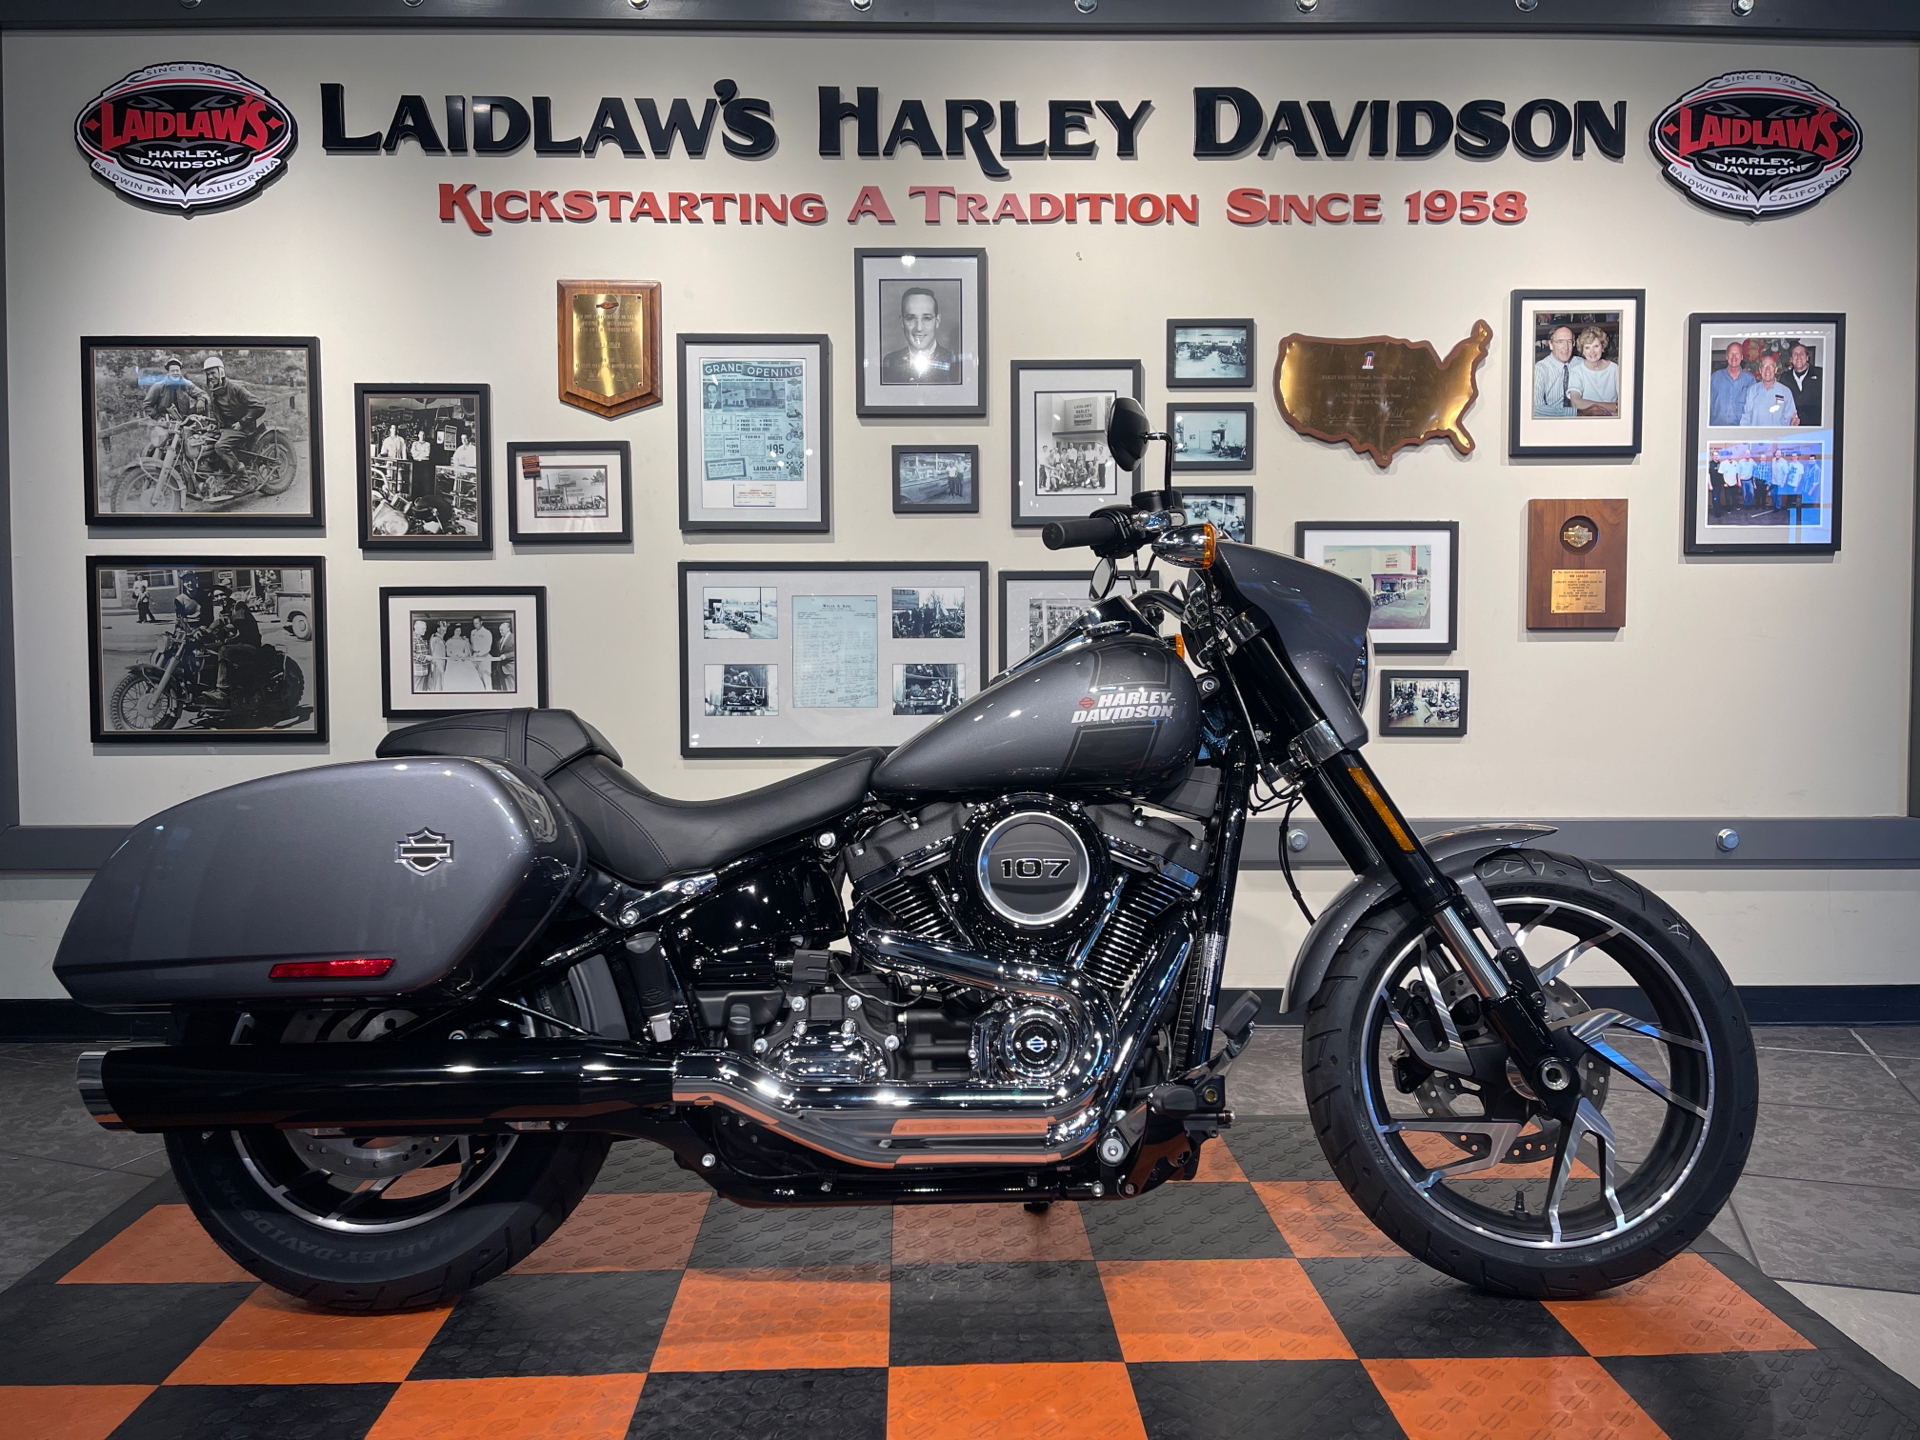 New 2021 Harley Davidson Sport Glide Gauntlet Gray Metallic Baldwin Park Ca 29193